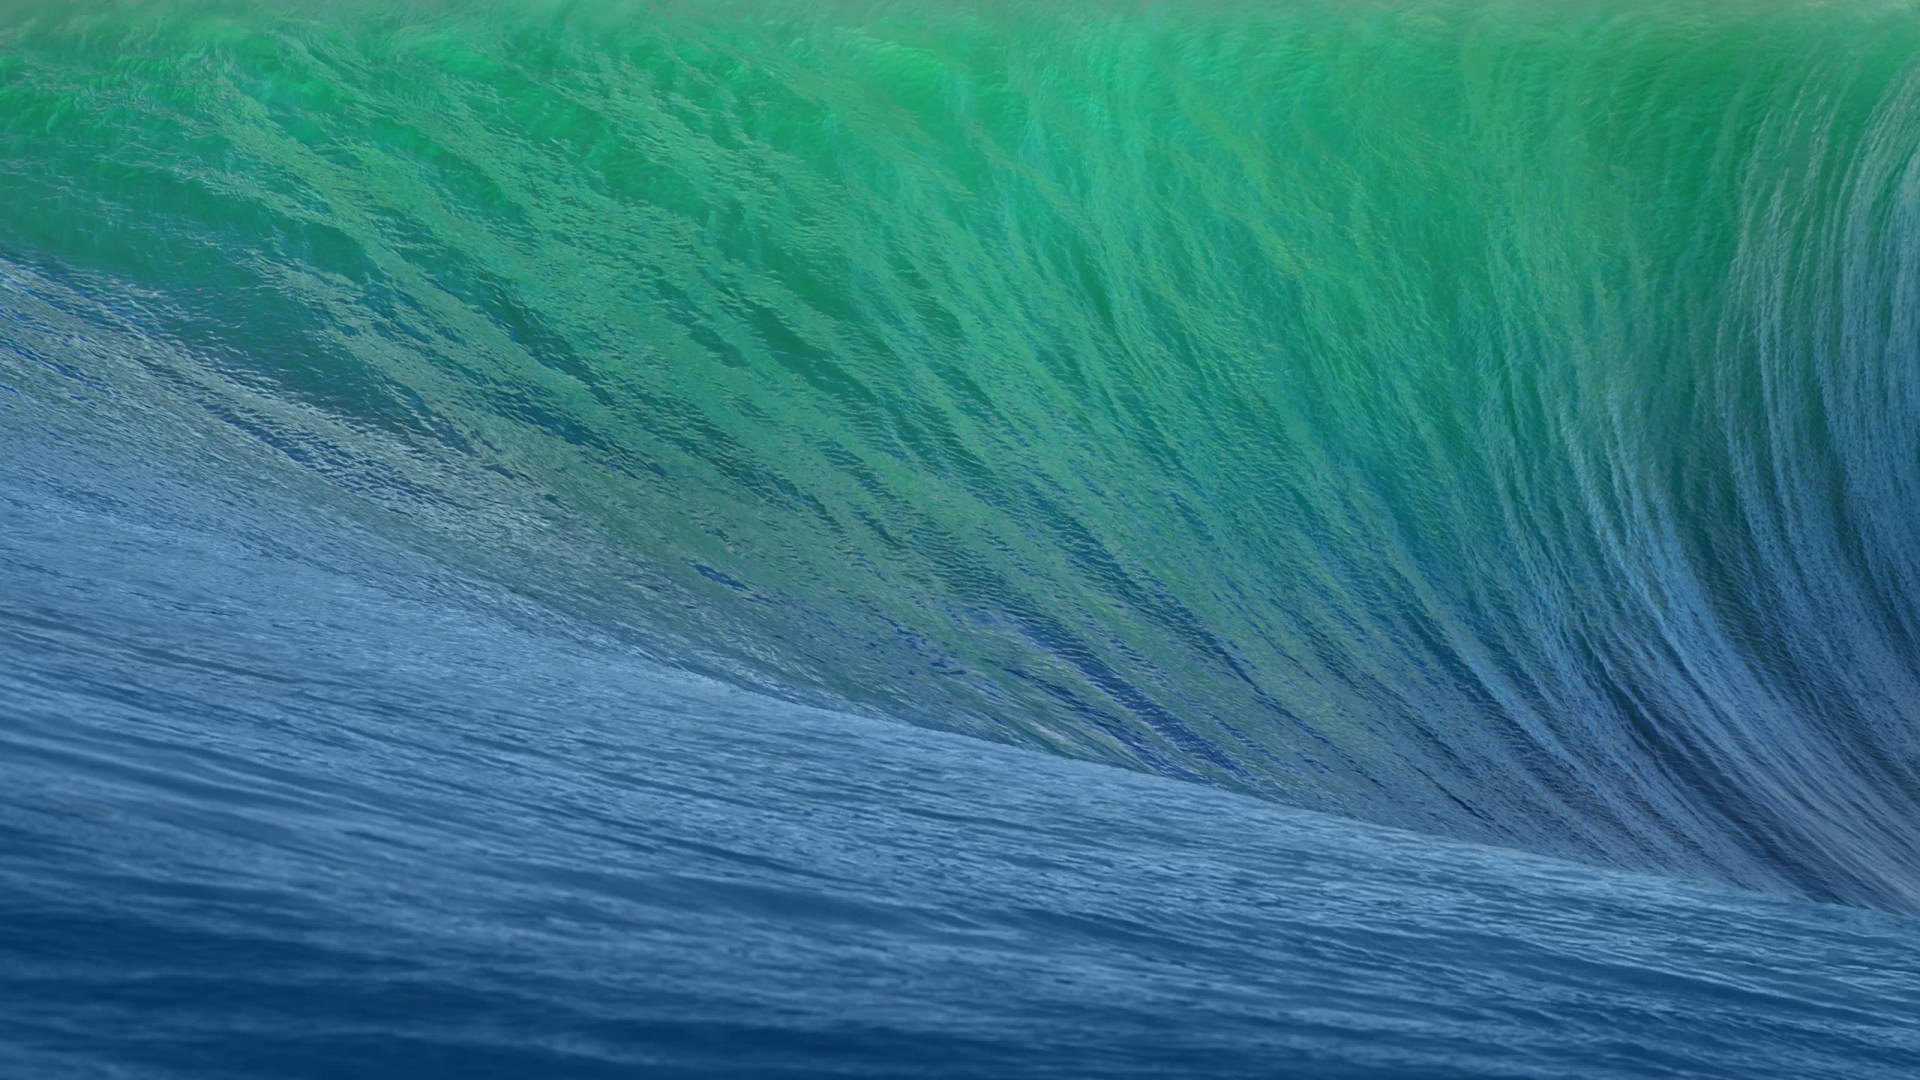 Macbook Air 4k Green Surf Wave Wallpaper